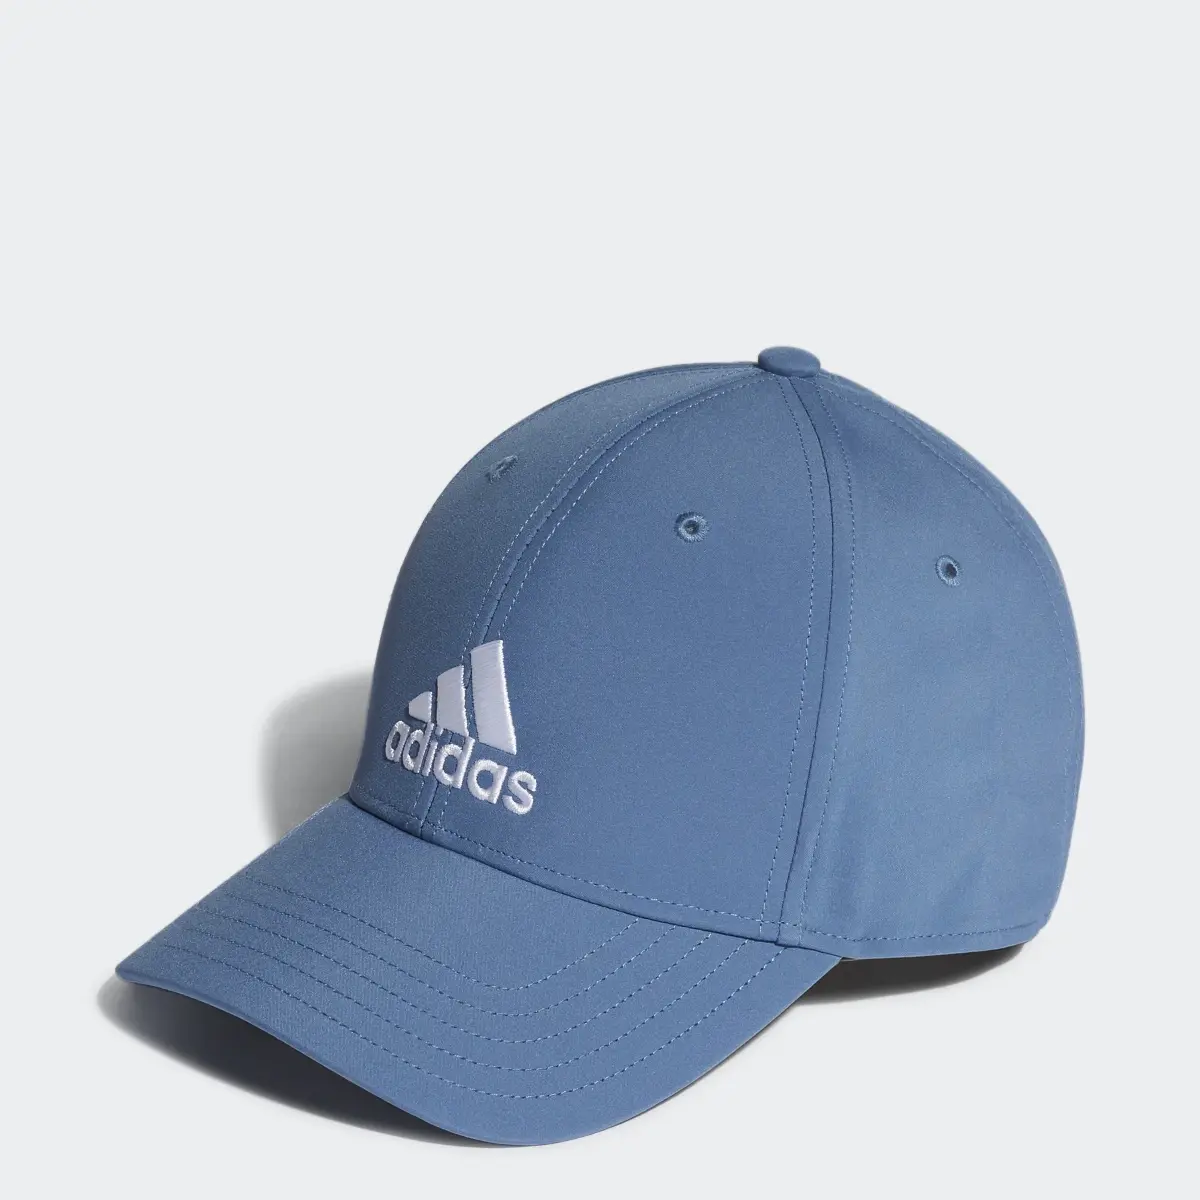 Adidas LIGHTWEIGHT EMBROIDERED BASEBALL CAP. 1